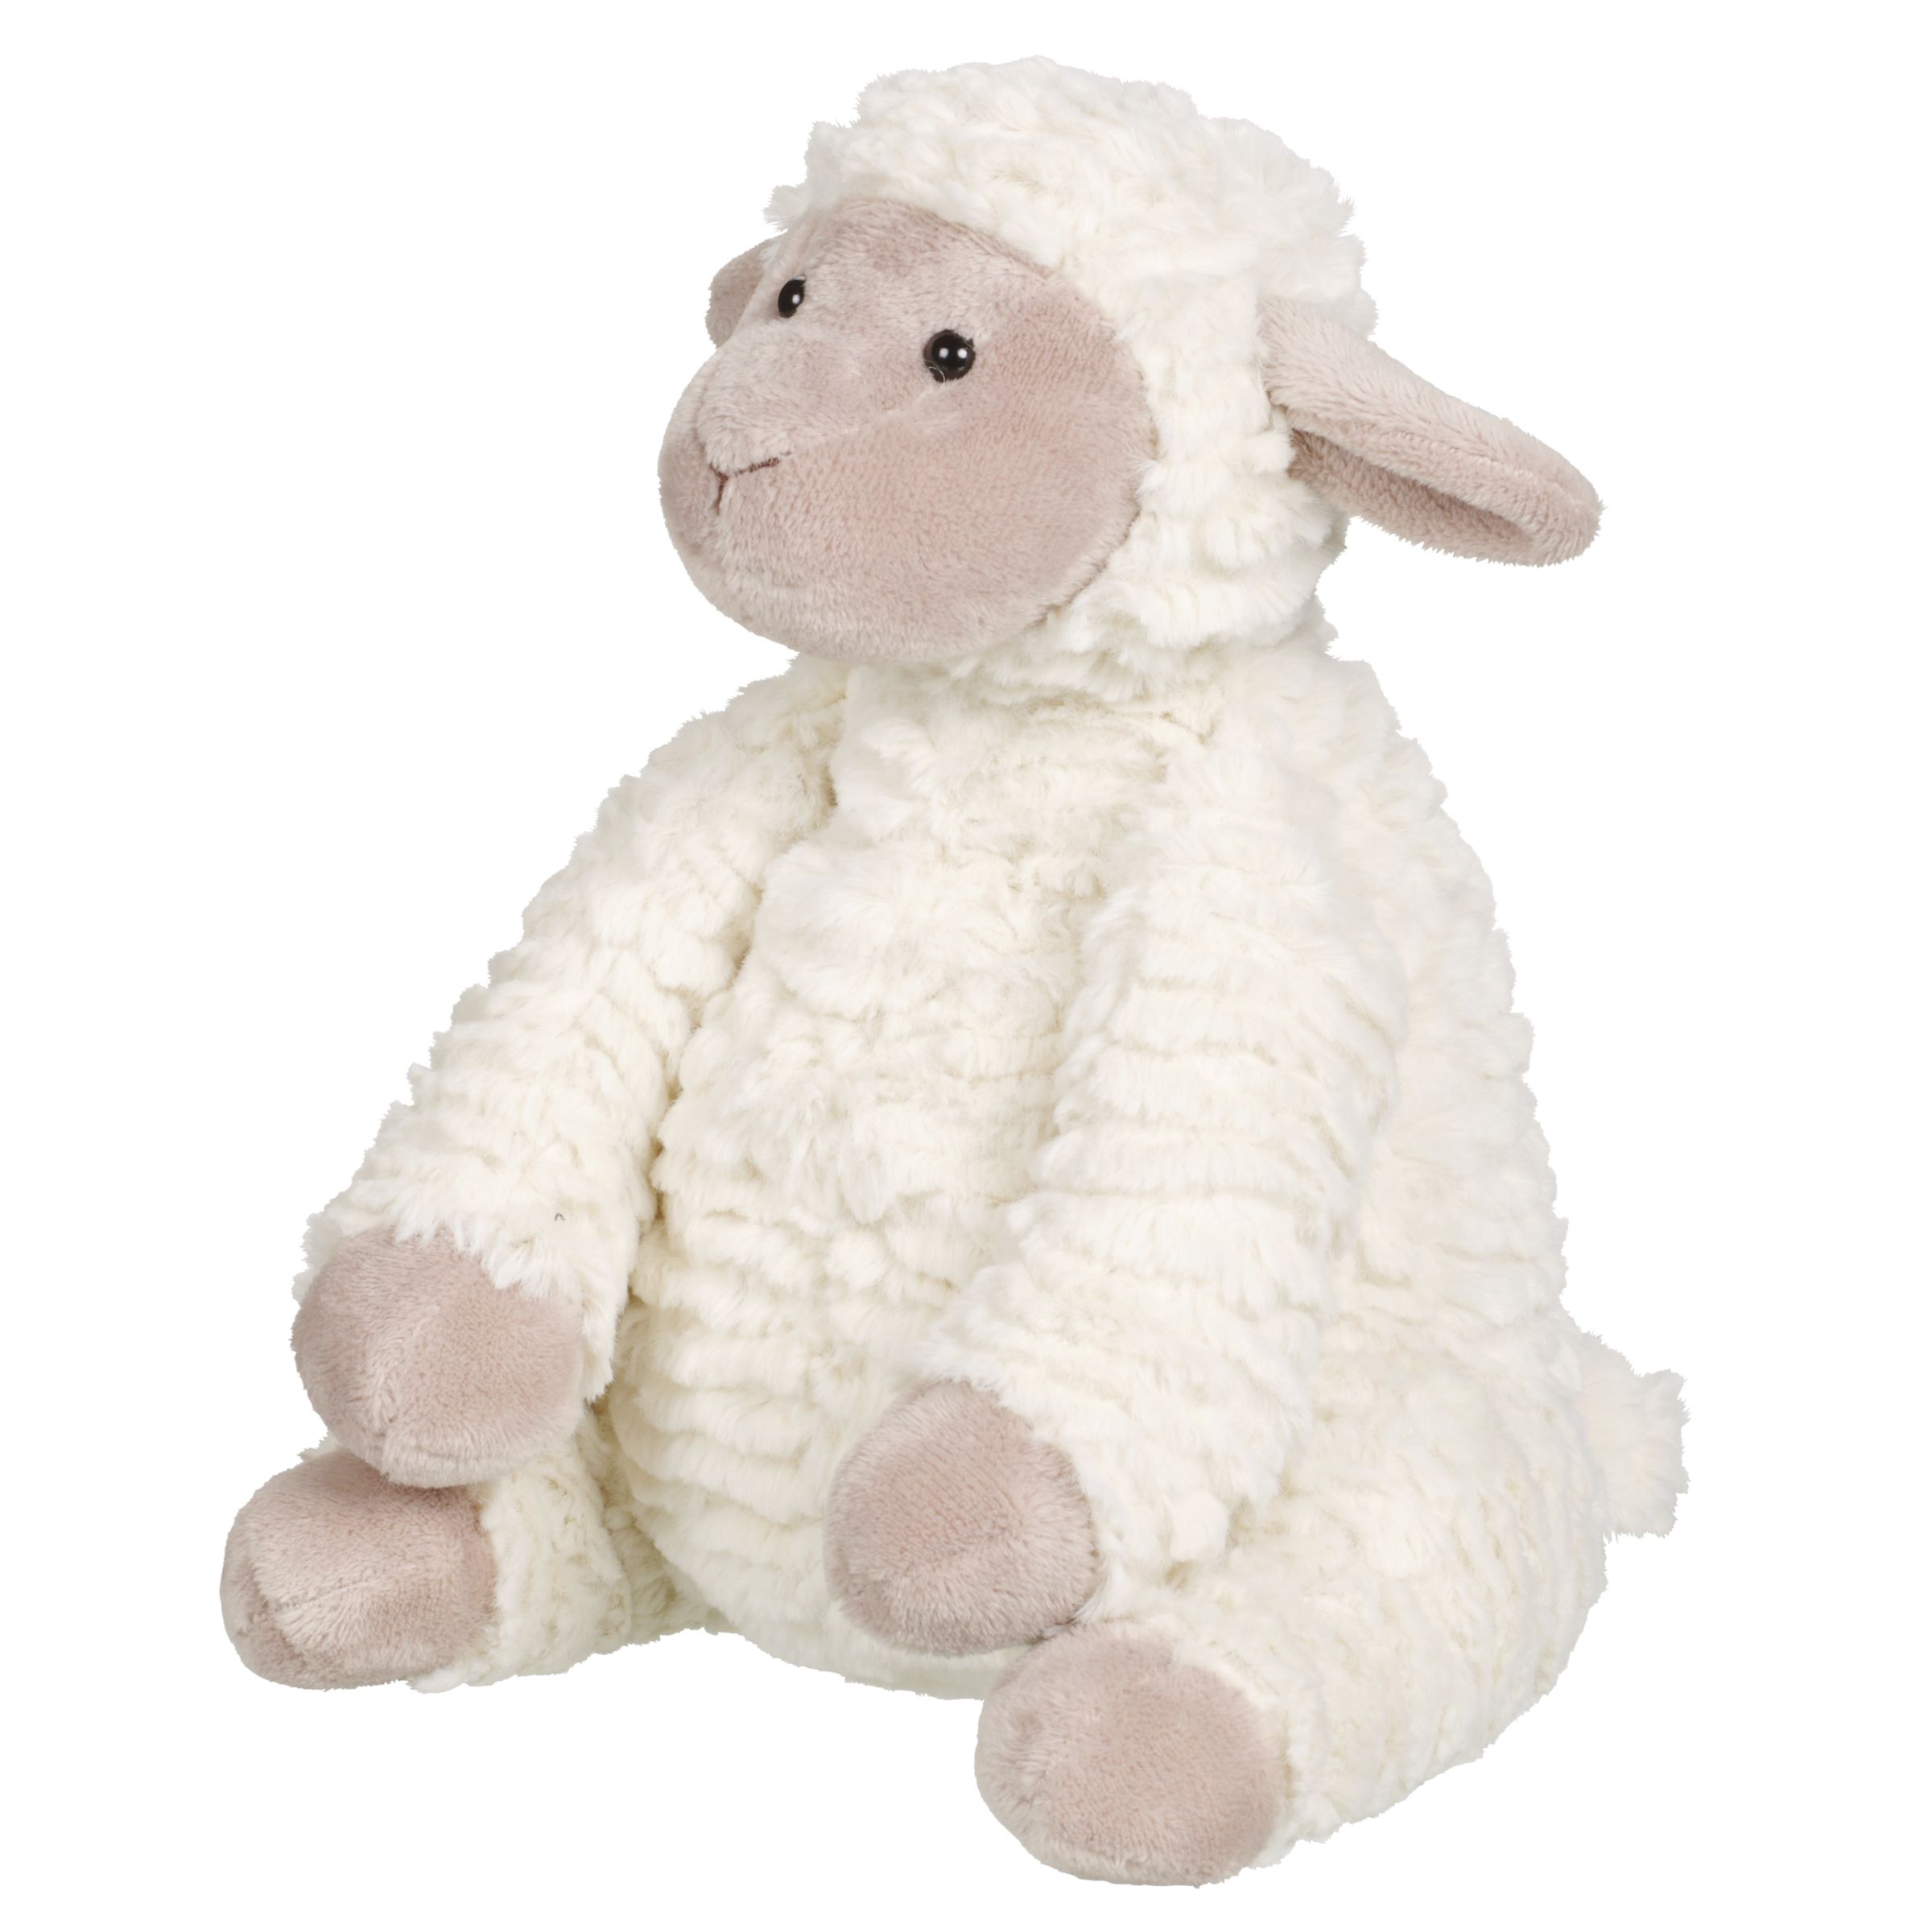 Fuddles the Lamb Soft Toy